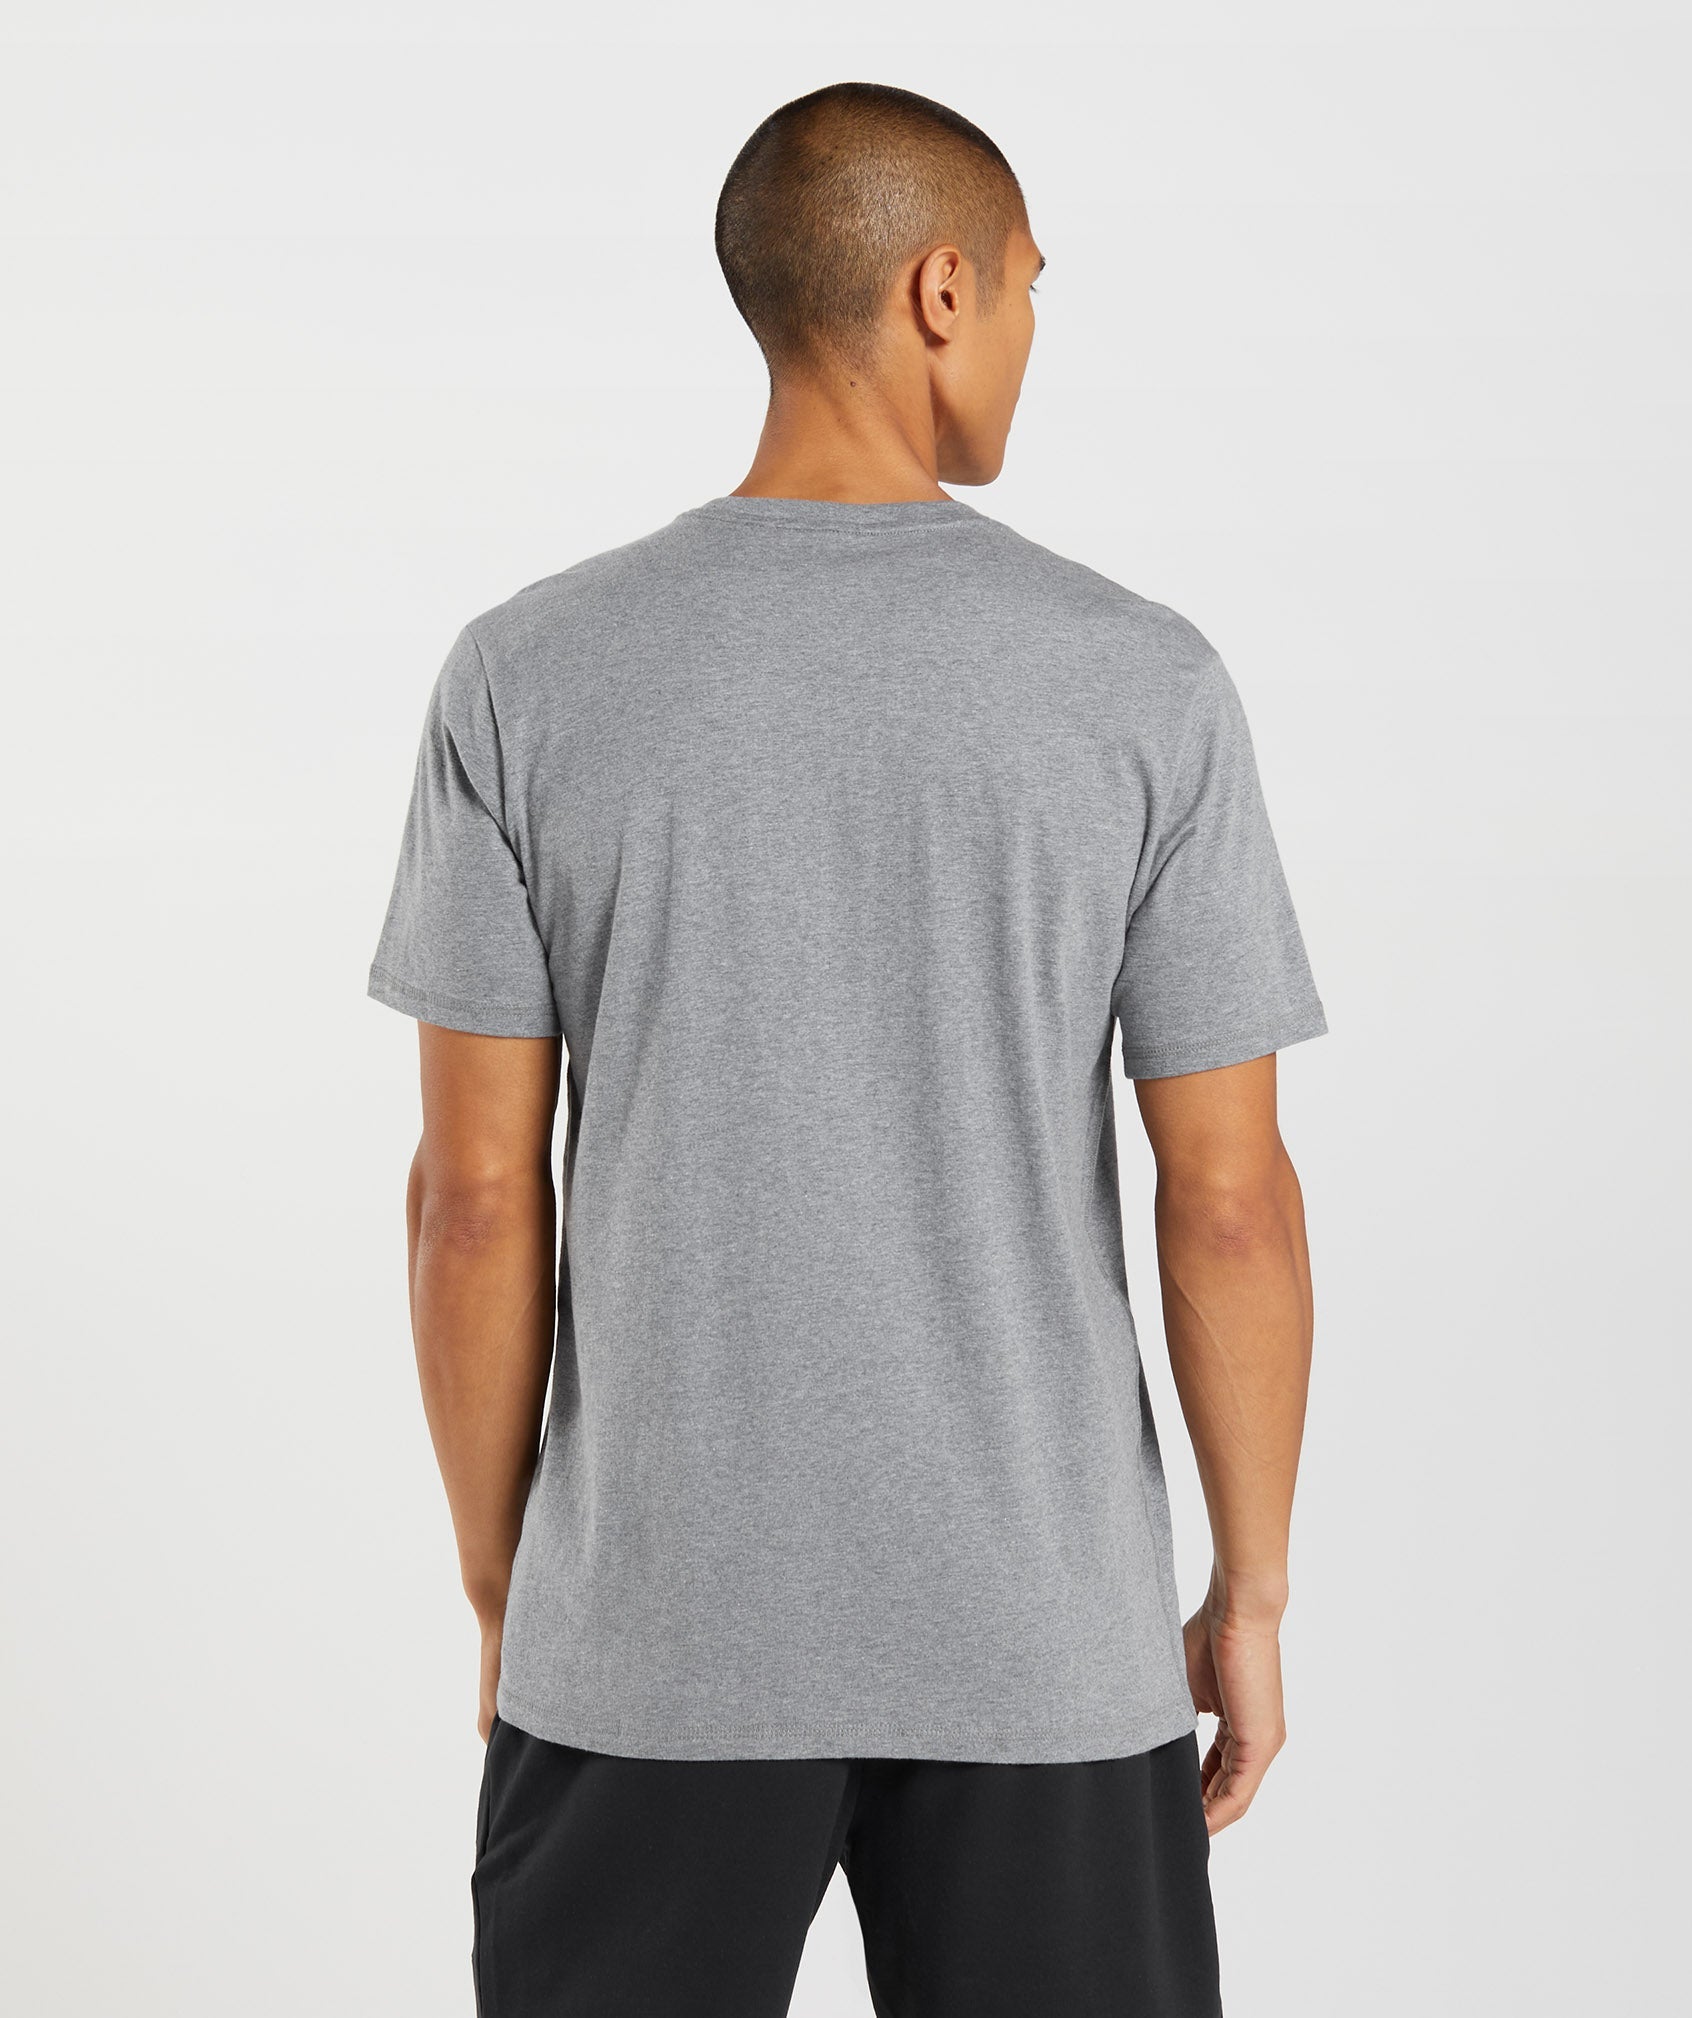 Sharkhead Infill T-Shirt in Charcoal Grey Marl - view 2